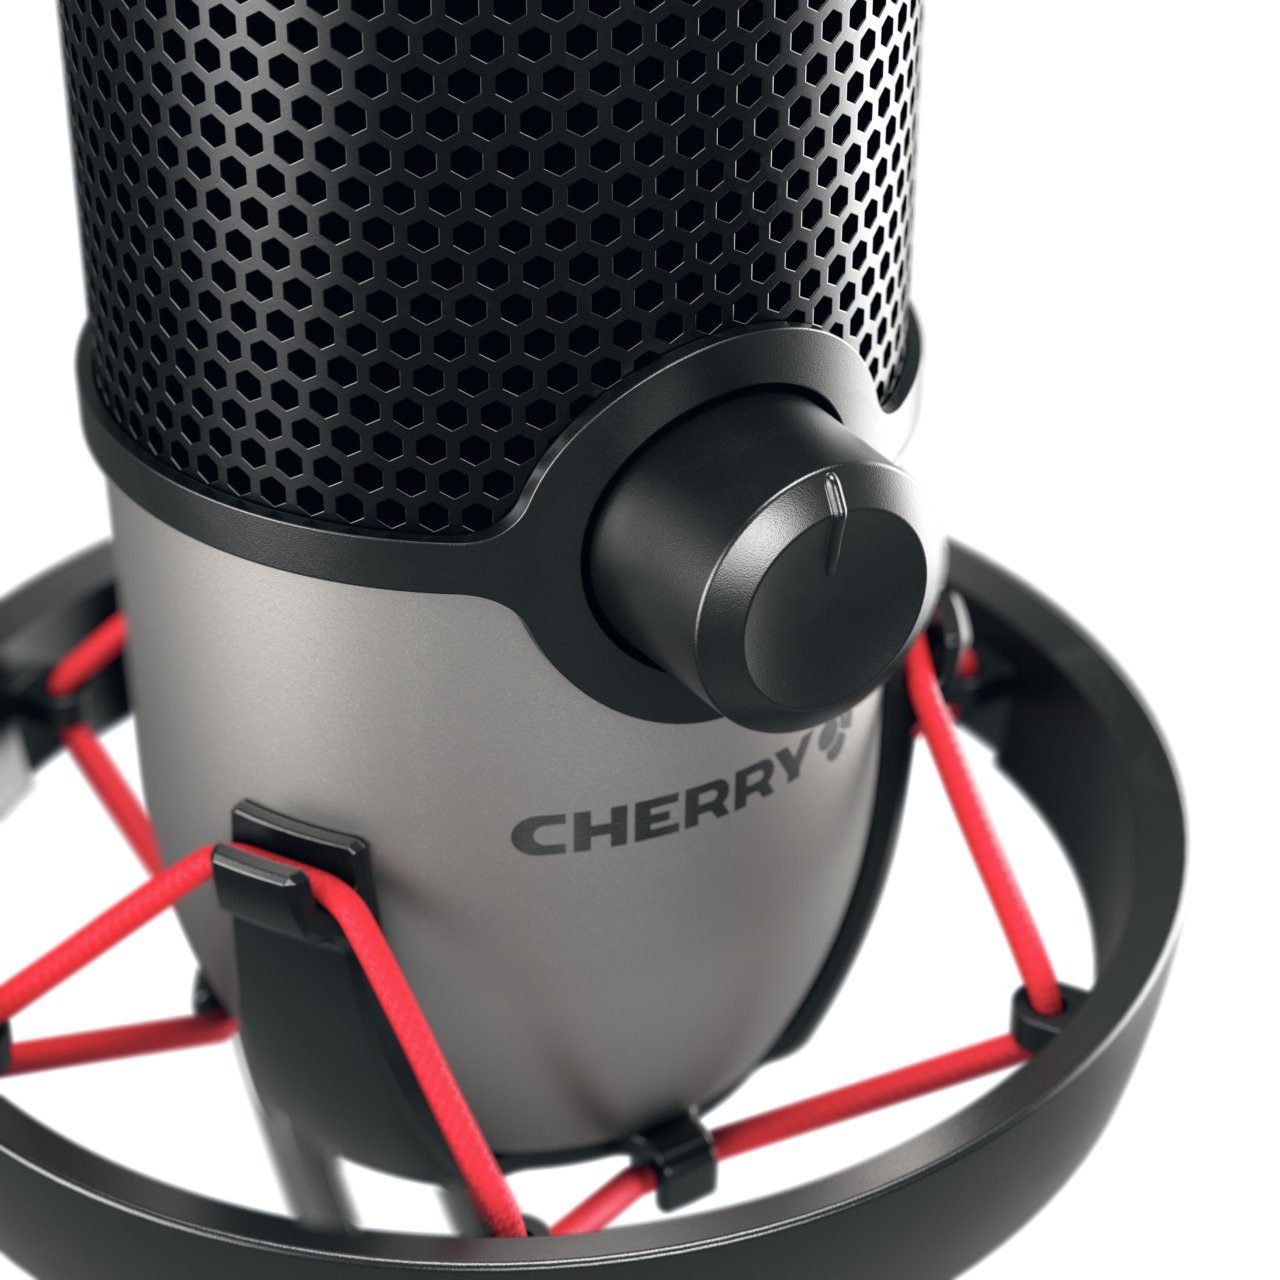 ADVANCED 6.0 UM Cherry Streaming-Mikrofon